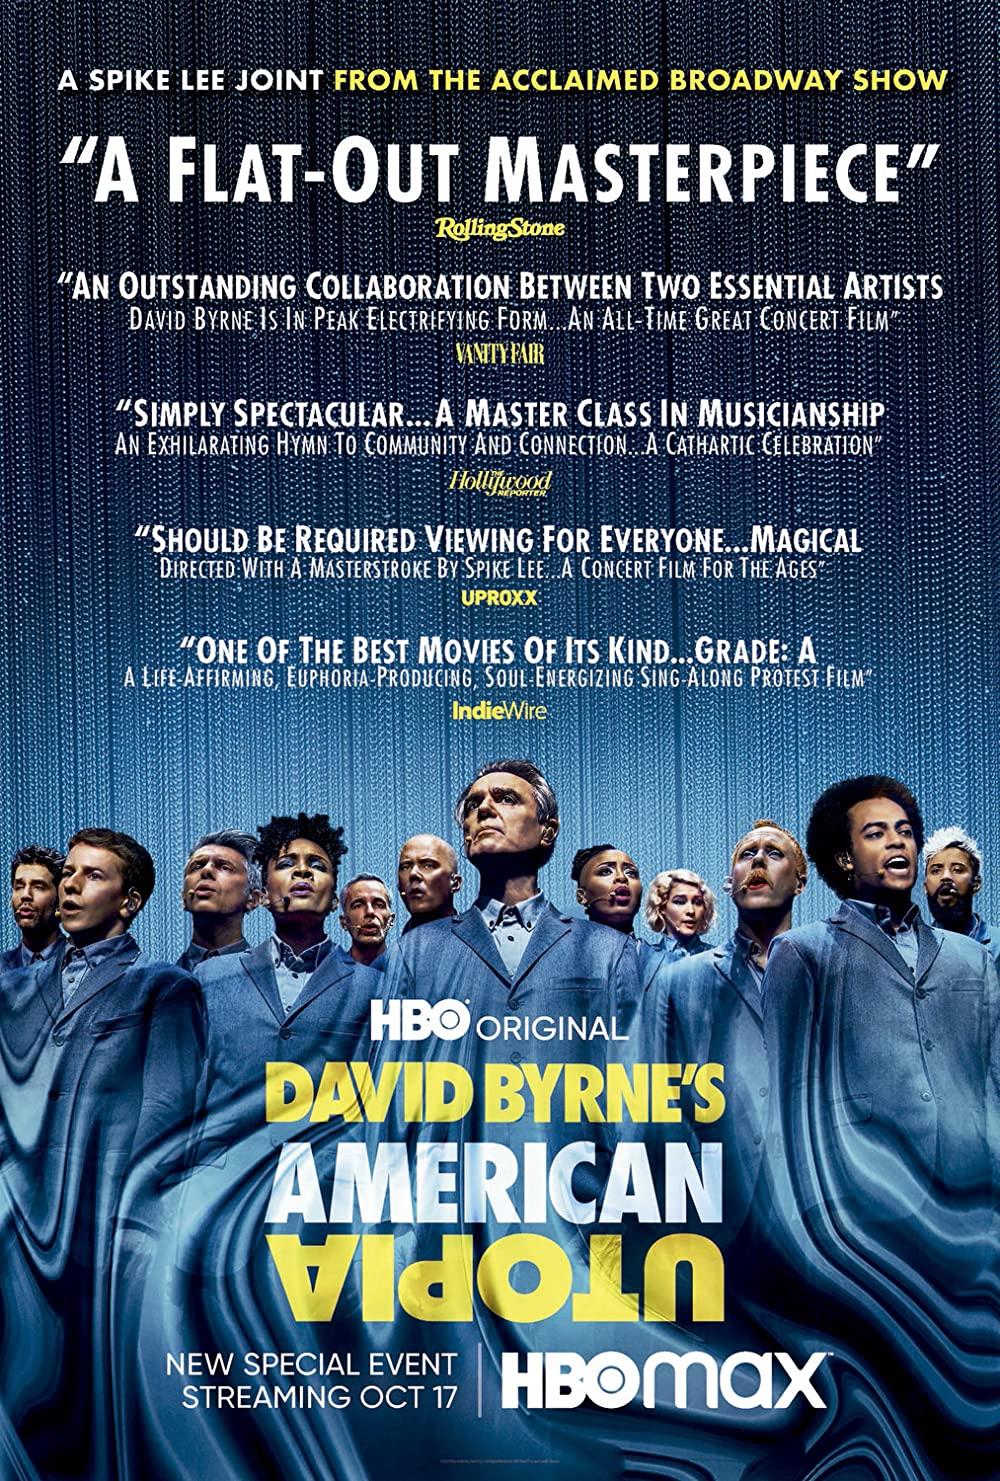 Filmbeschreibung zu David Byrne's American Utopia